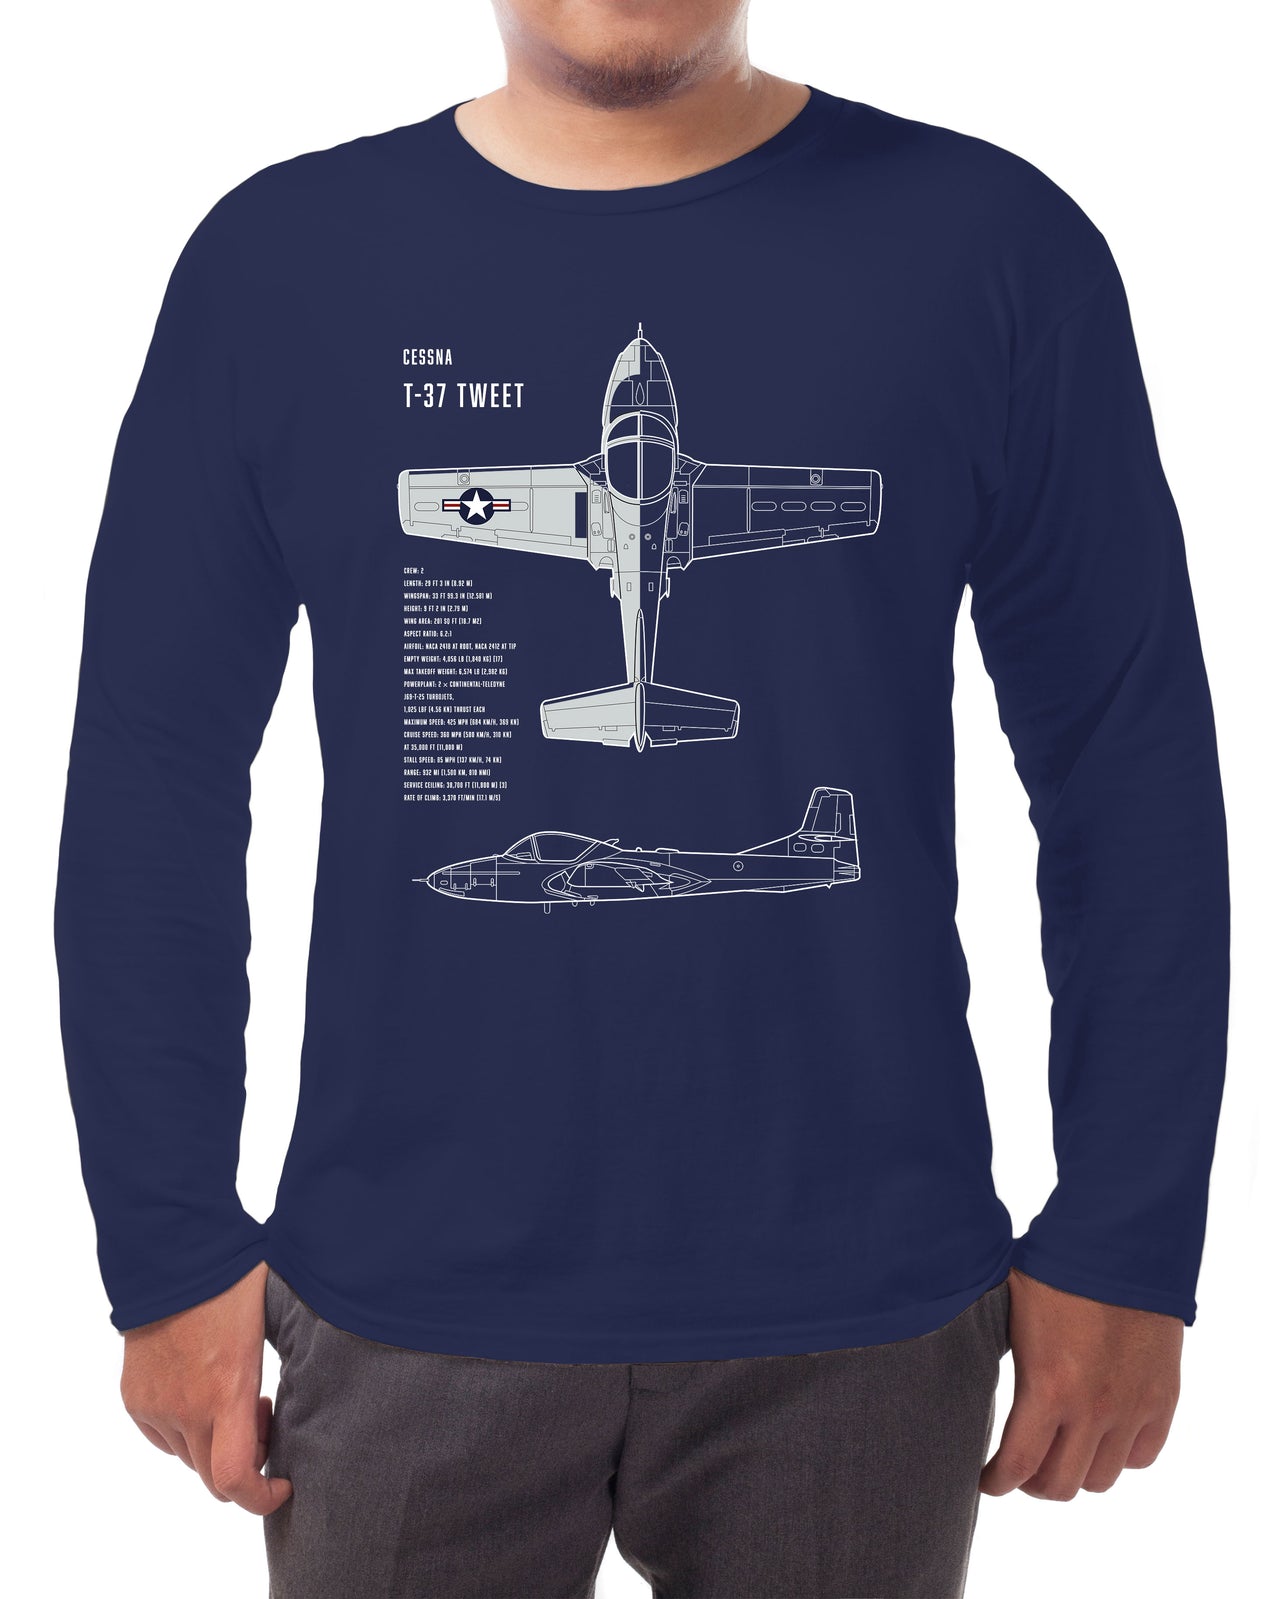 T-37 Tweet - Long-sleeve T-shirt